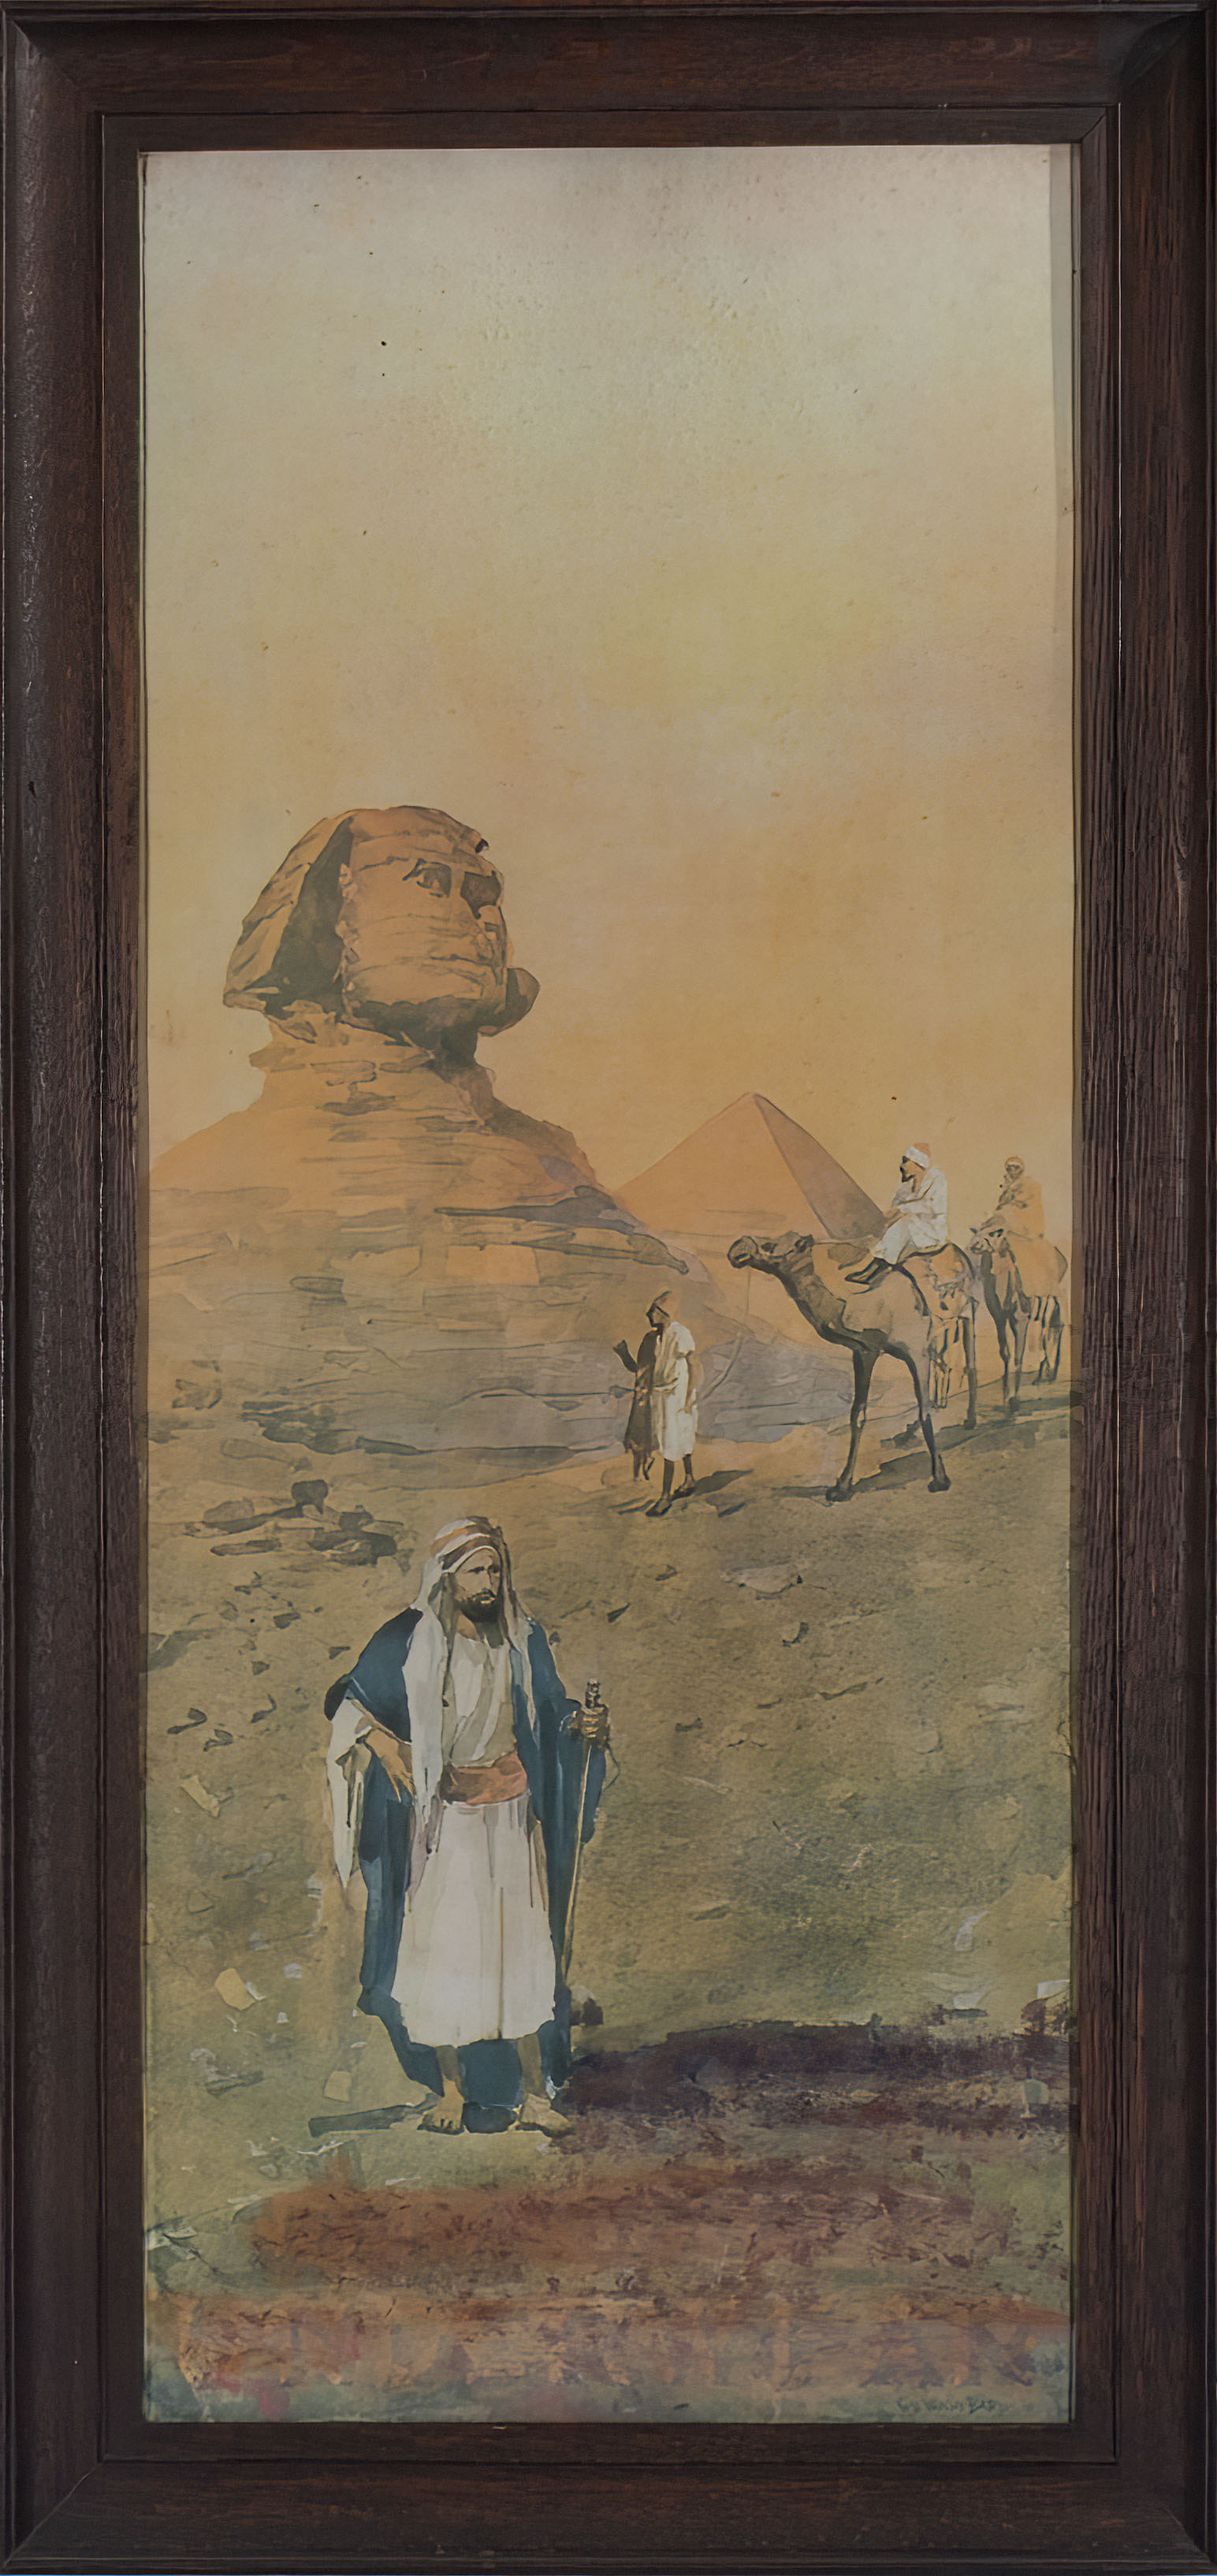 Framed print of a Middle East scene 84cm x 40cm